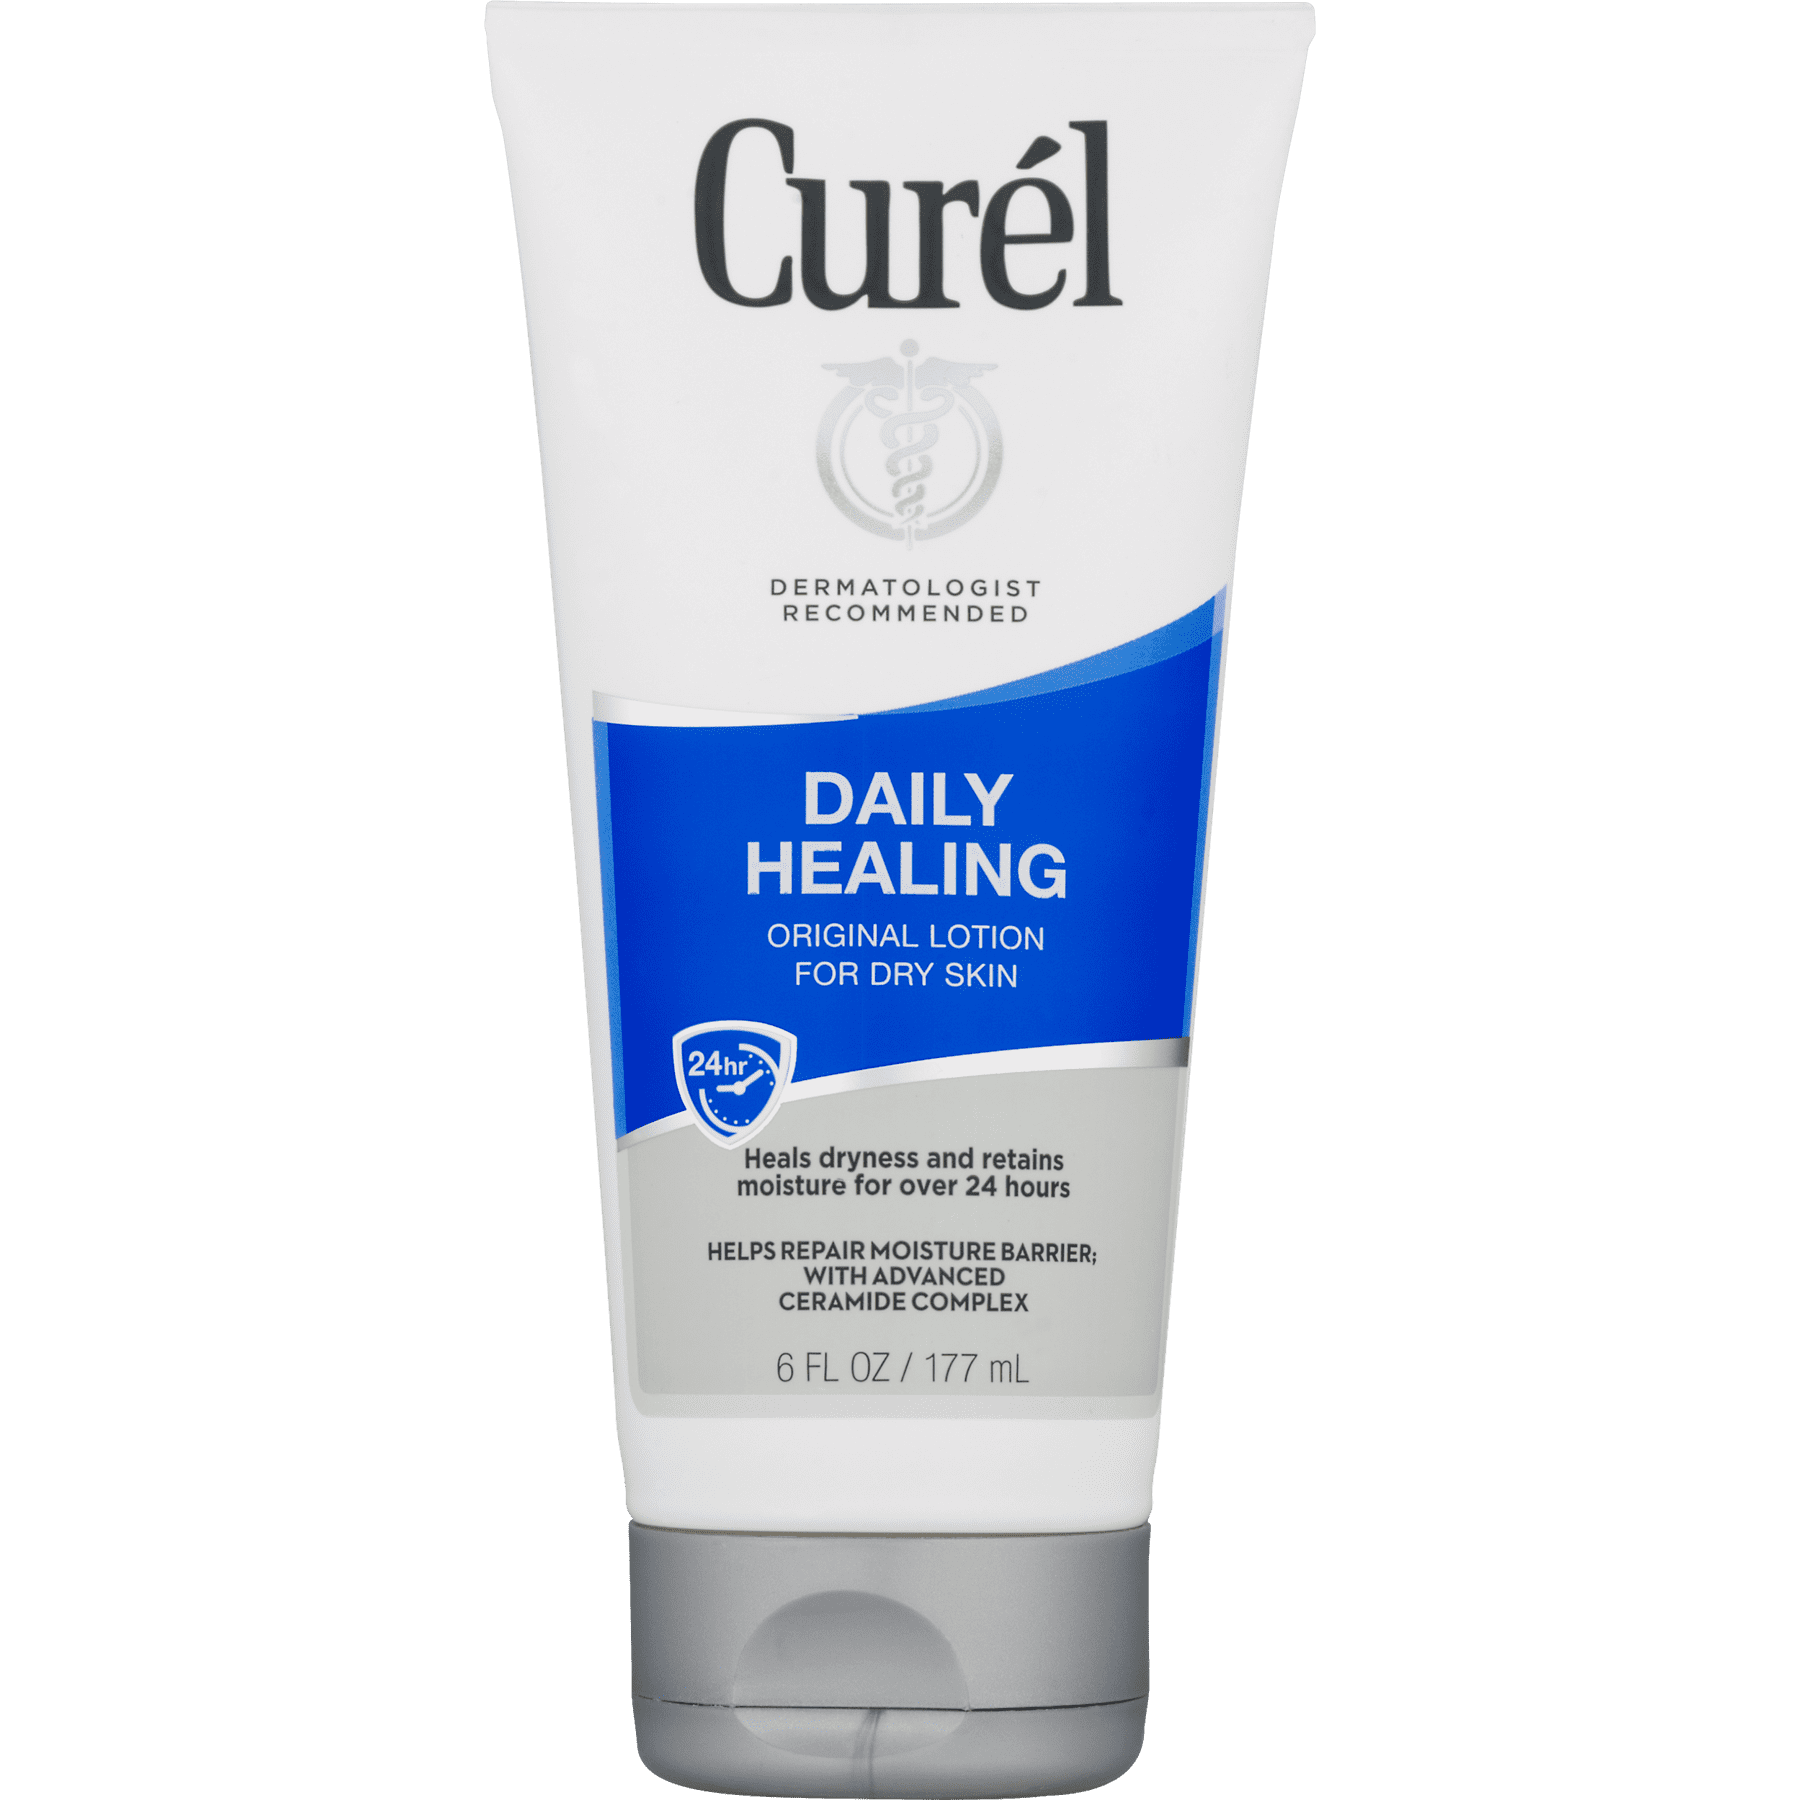 Curel lotion